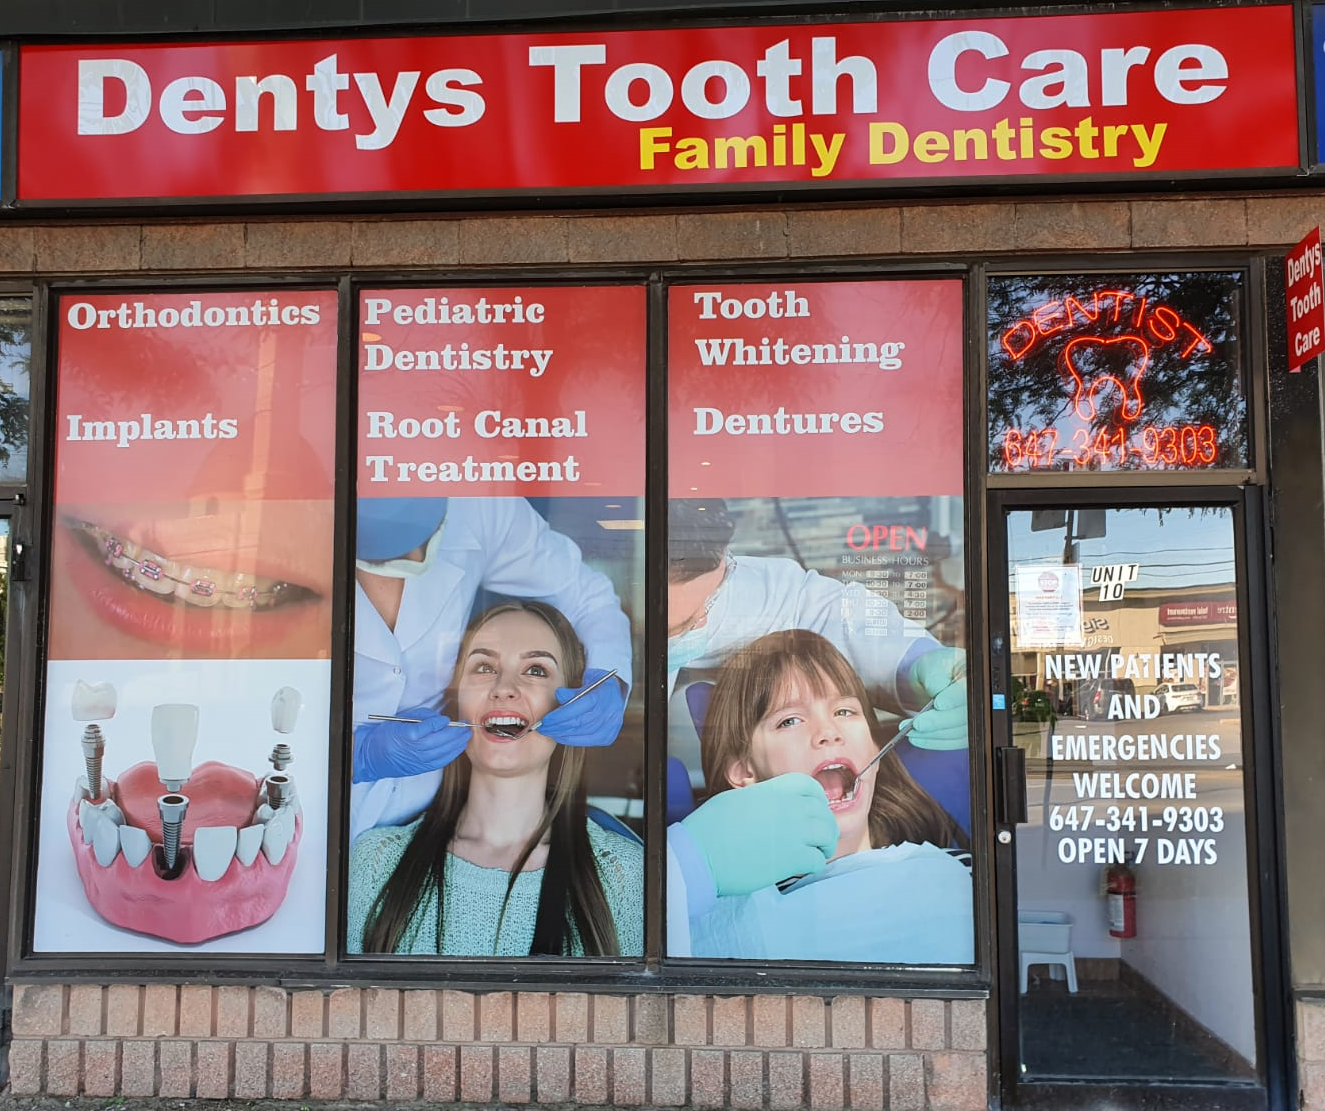 Dentys Tooth Care